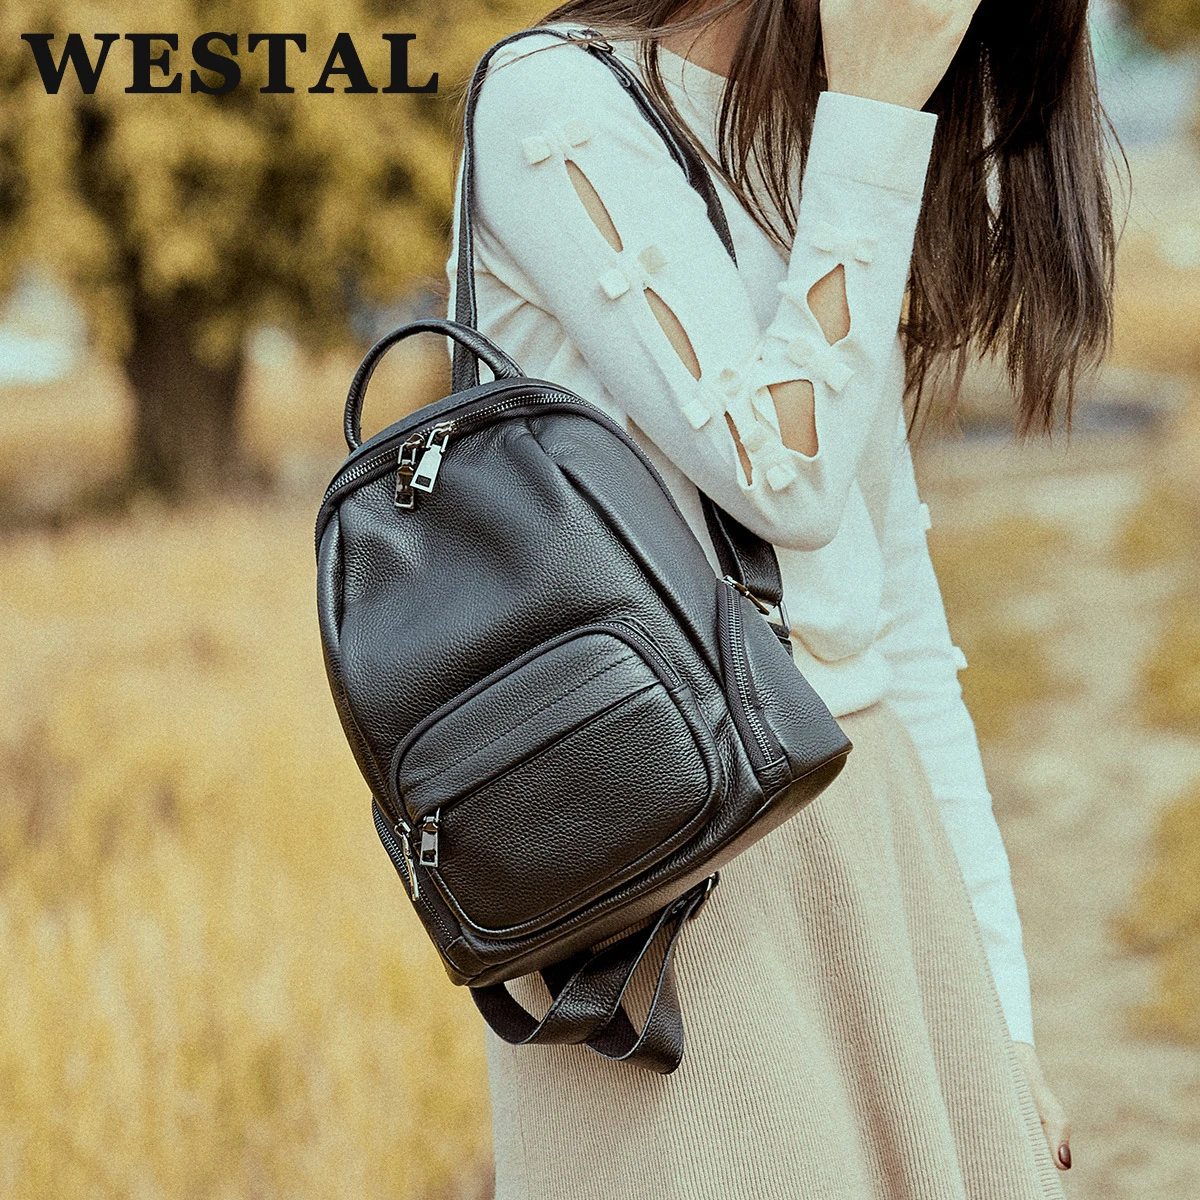 WESTAL Trending Products Genuine Leather Women's Backpack Girls School Bag Travel A4 Satchel mochilas para mujer envio gratis